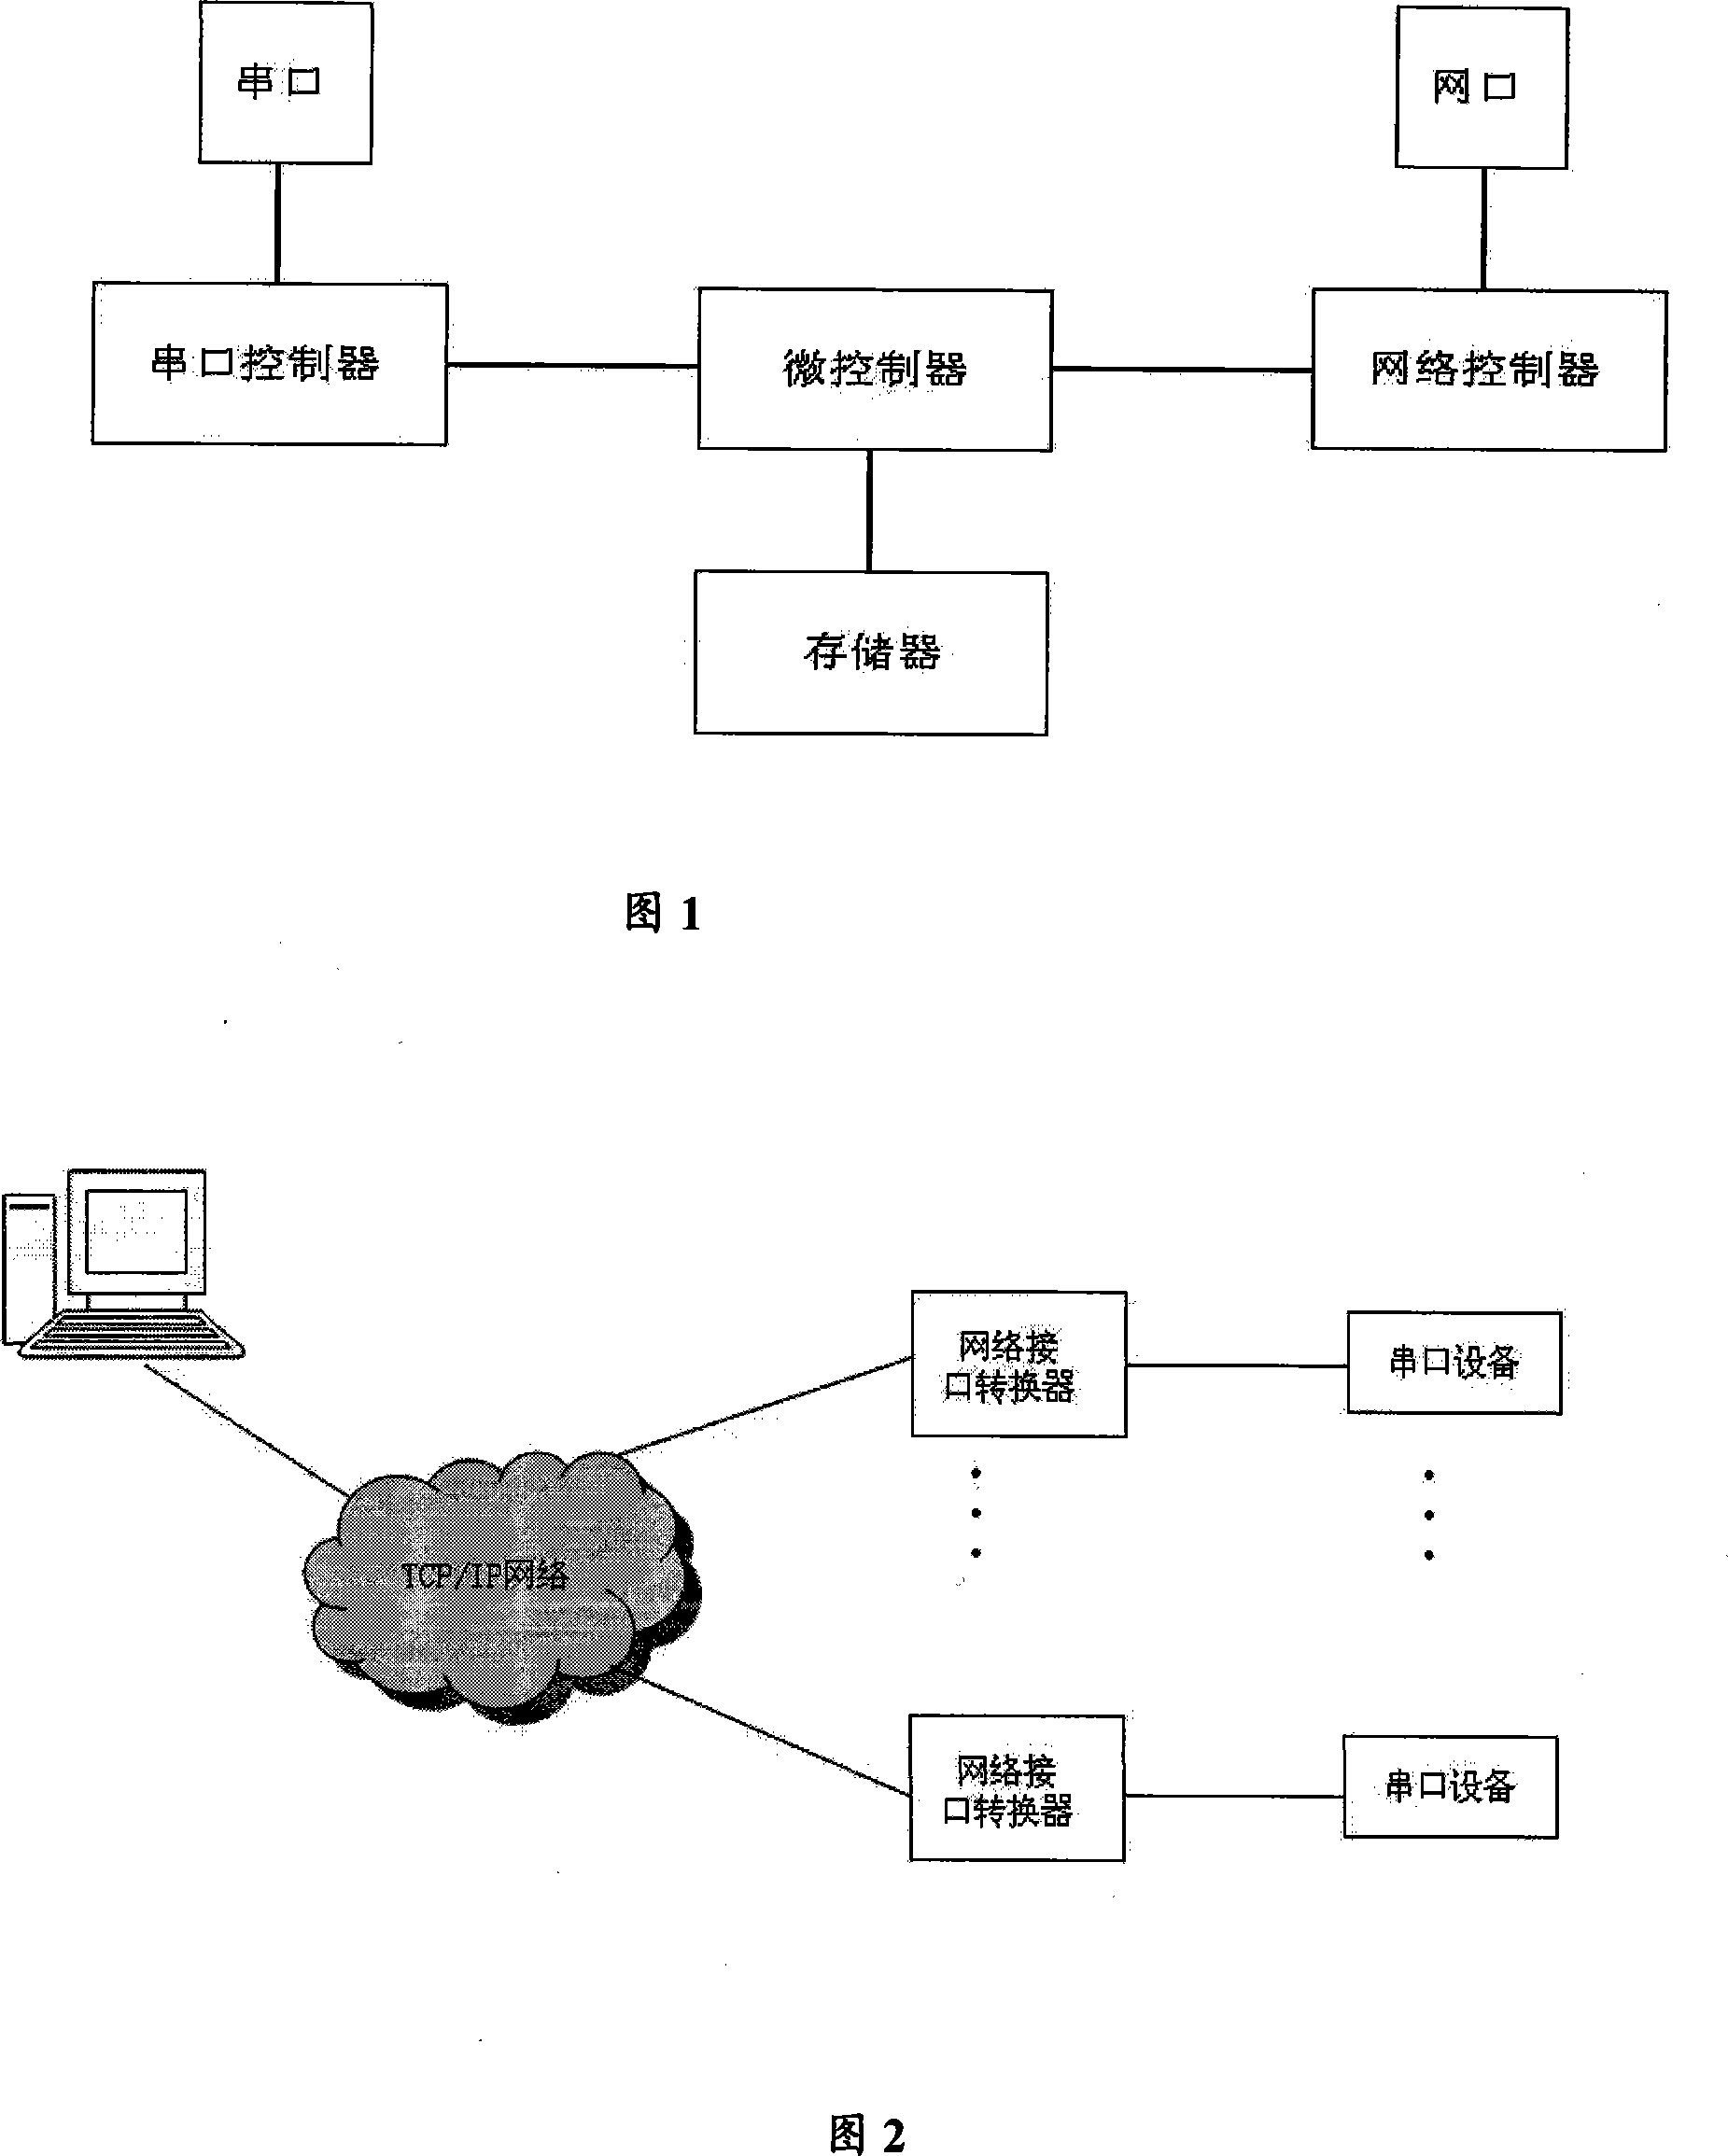 Ethernet interface converter